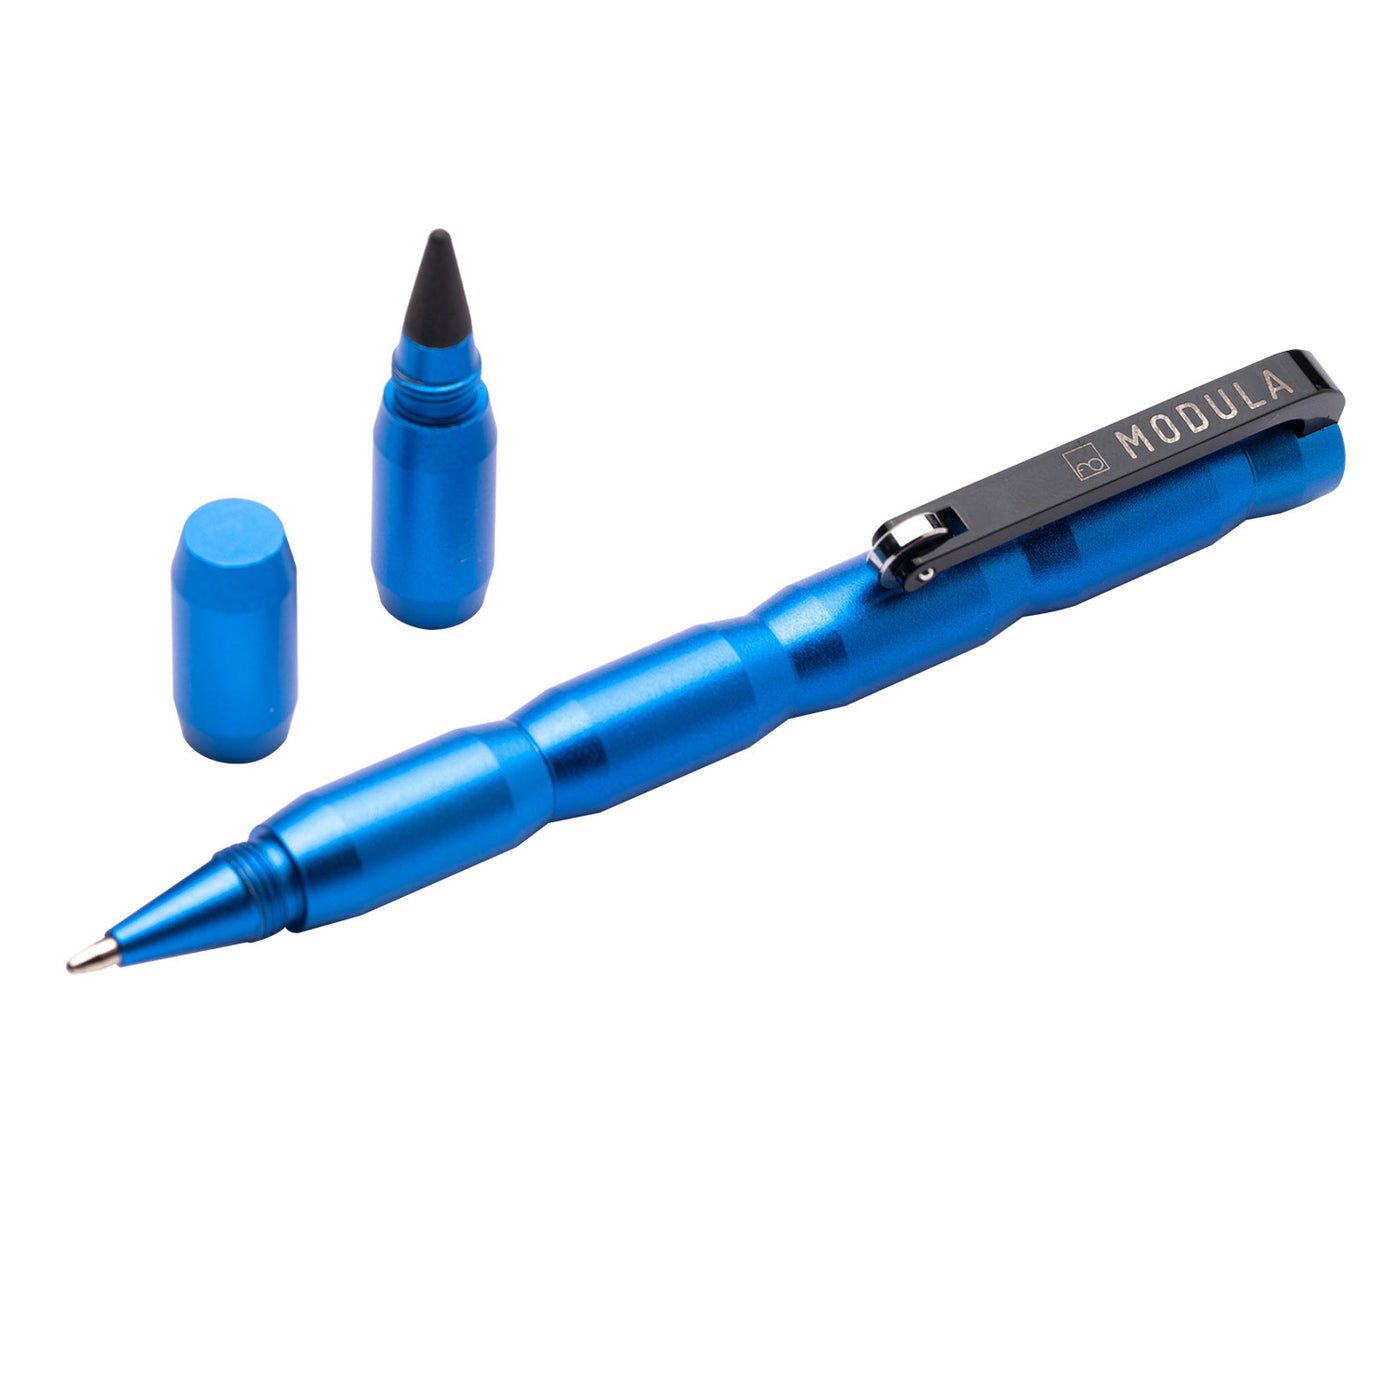 Pininfarina Segno Forever Modula Multifunction Pen - Blue 1